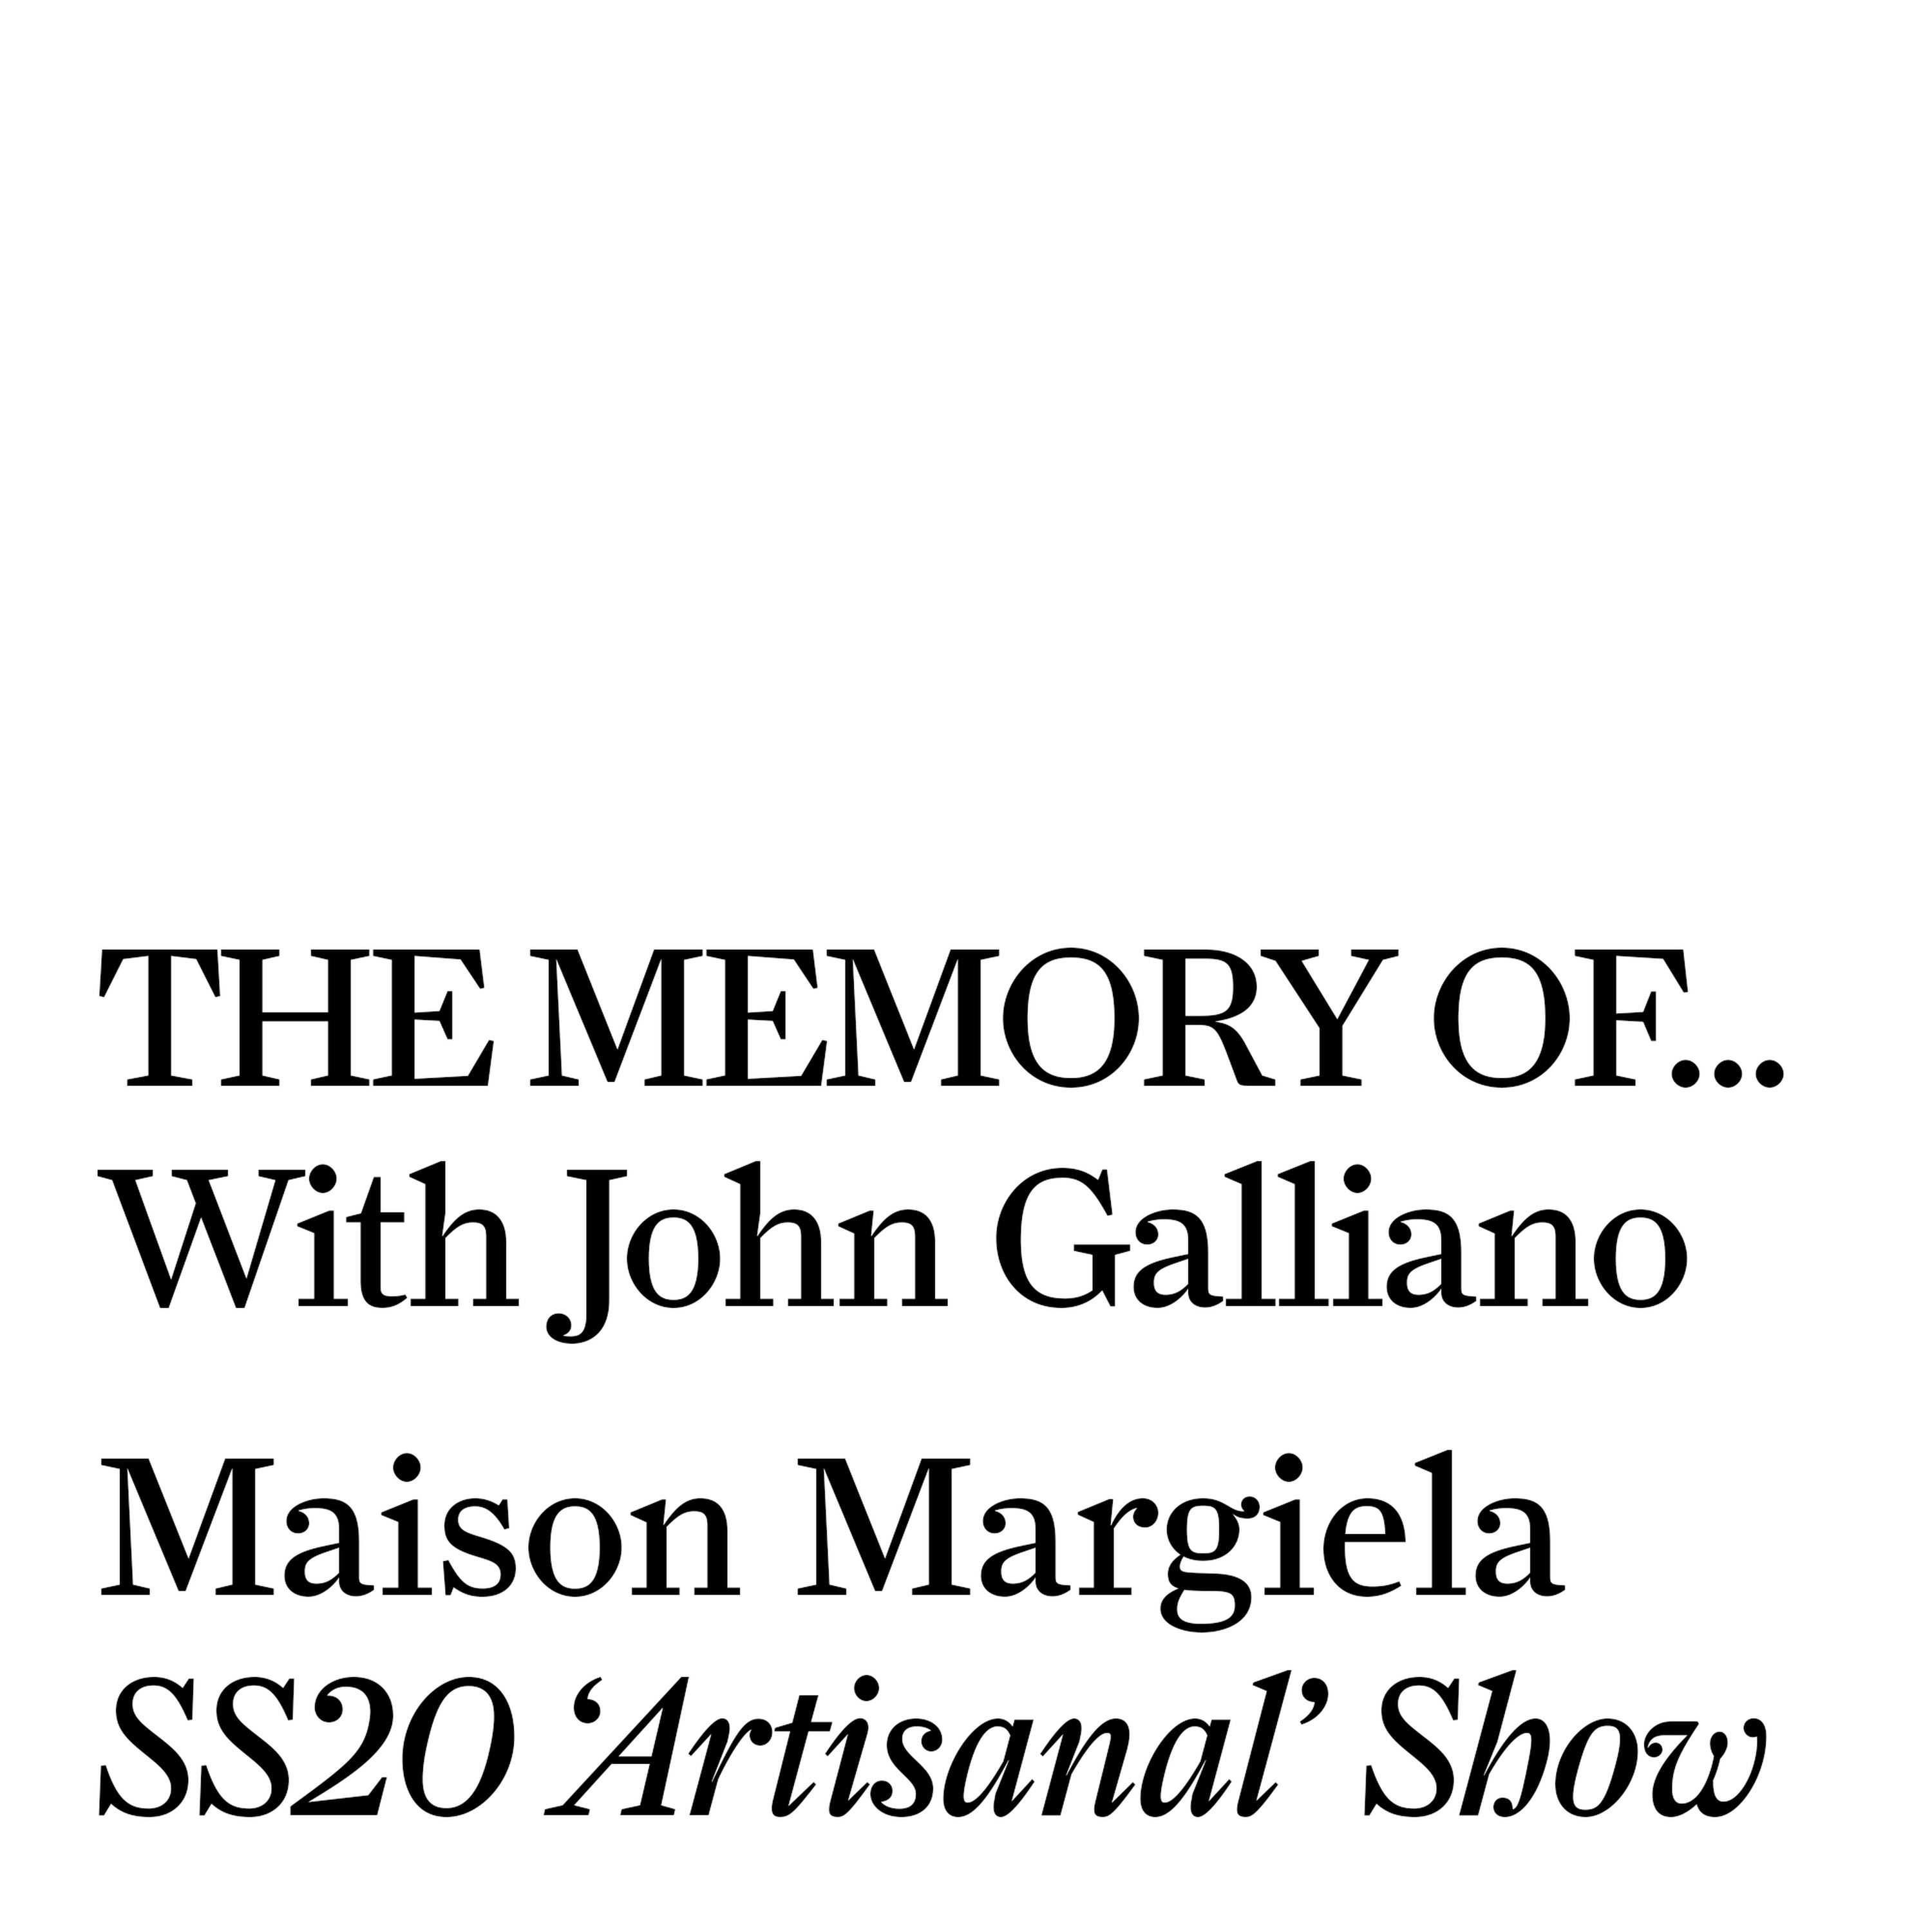 Maison Margiela SS20 'Artisanal' Co-ed Show